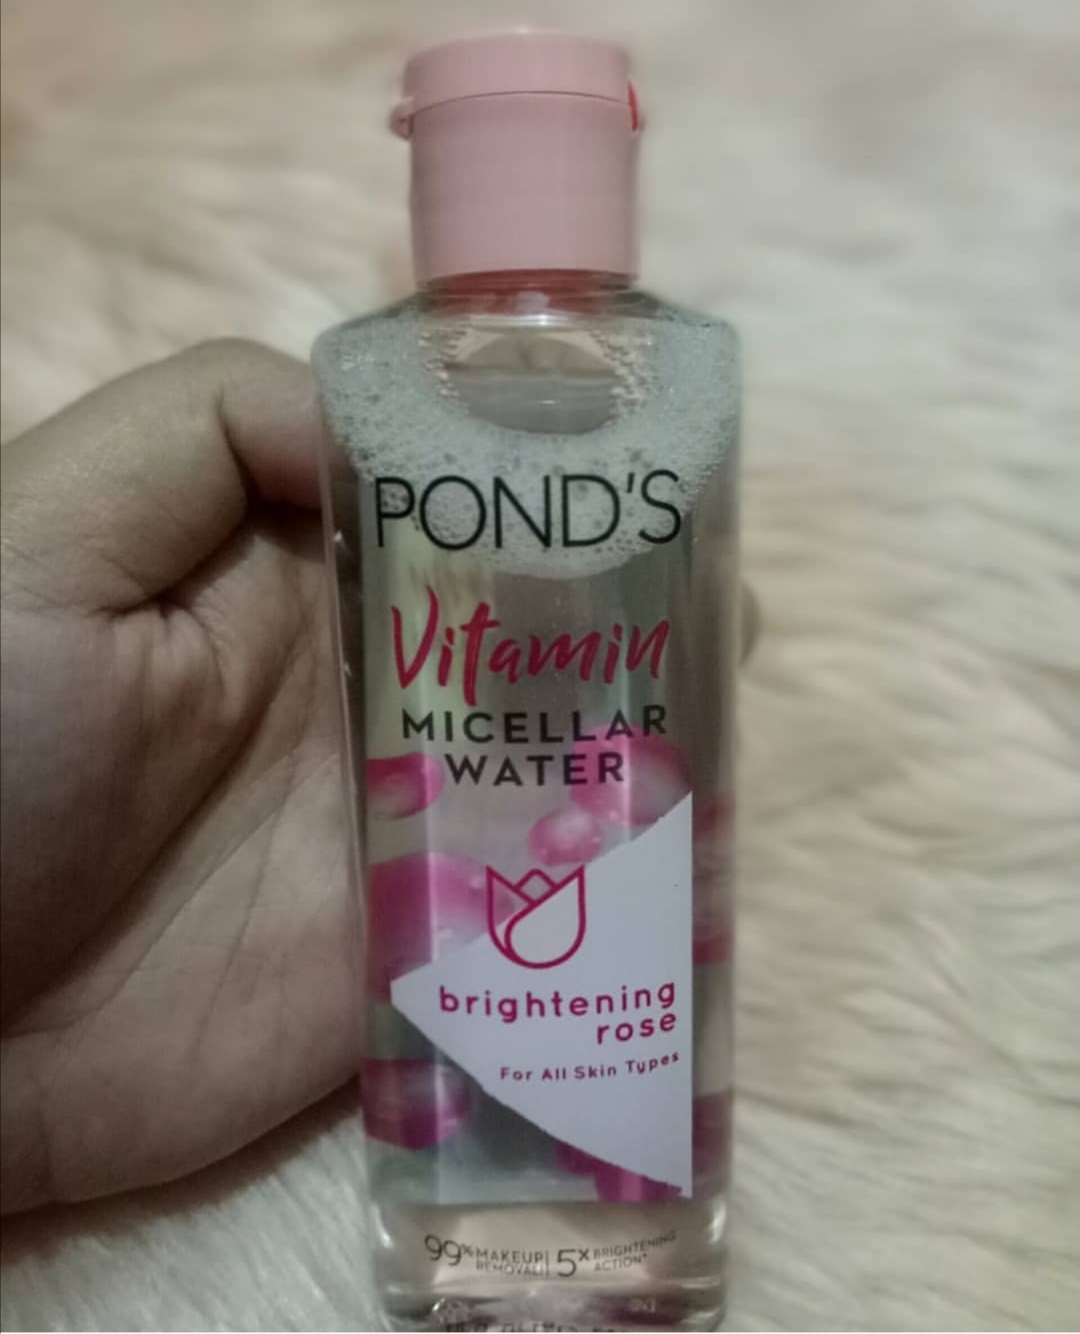 Pond's Vitamin Micellar Water| Review